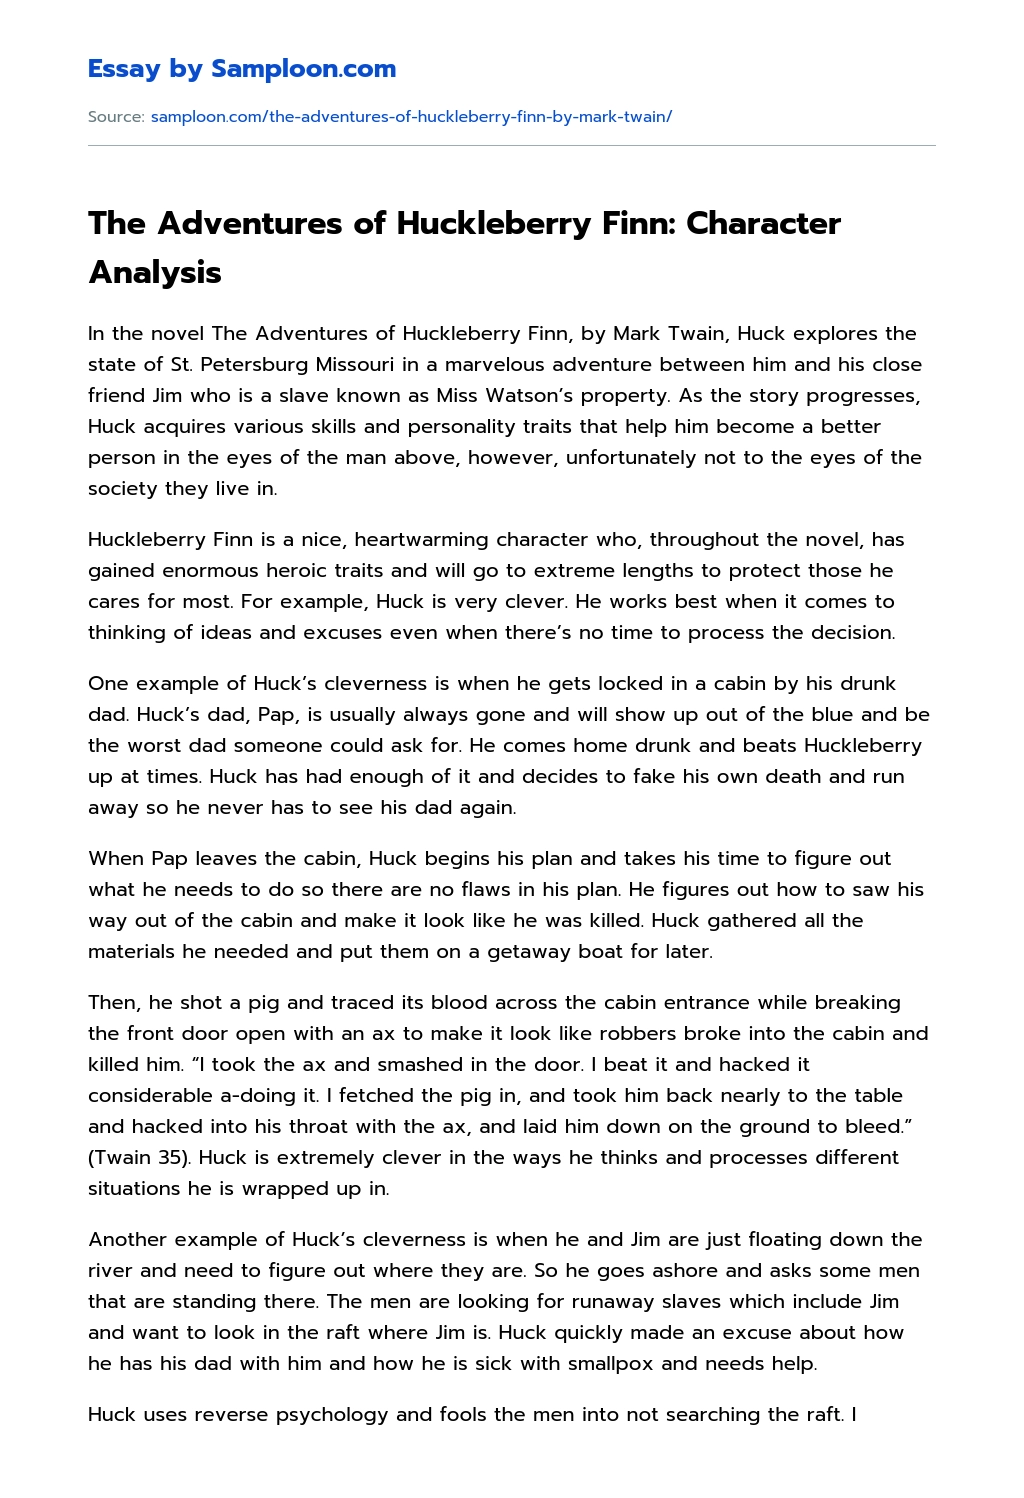 The Adventures of Huckleberry Finn: Character Analysis essay